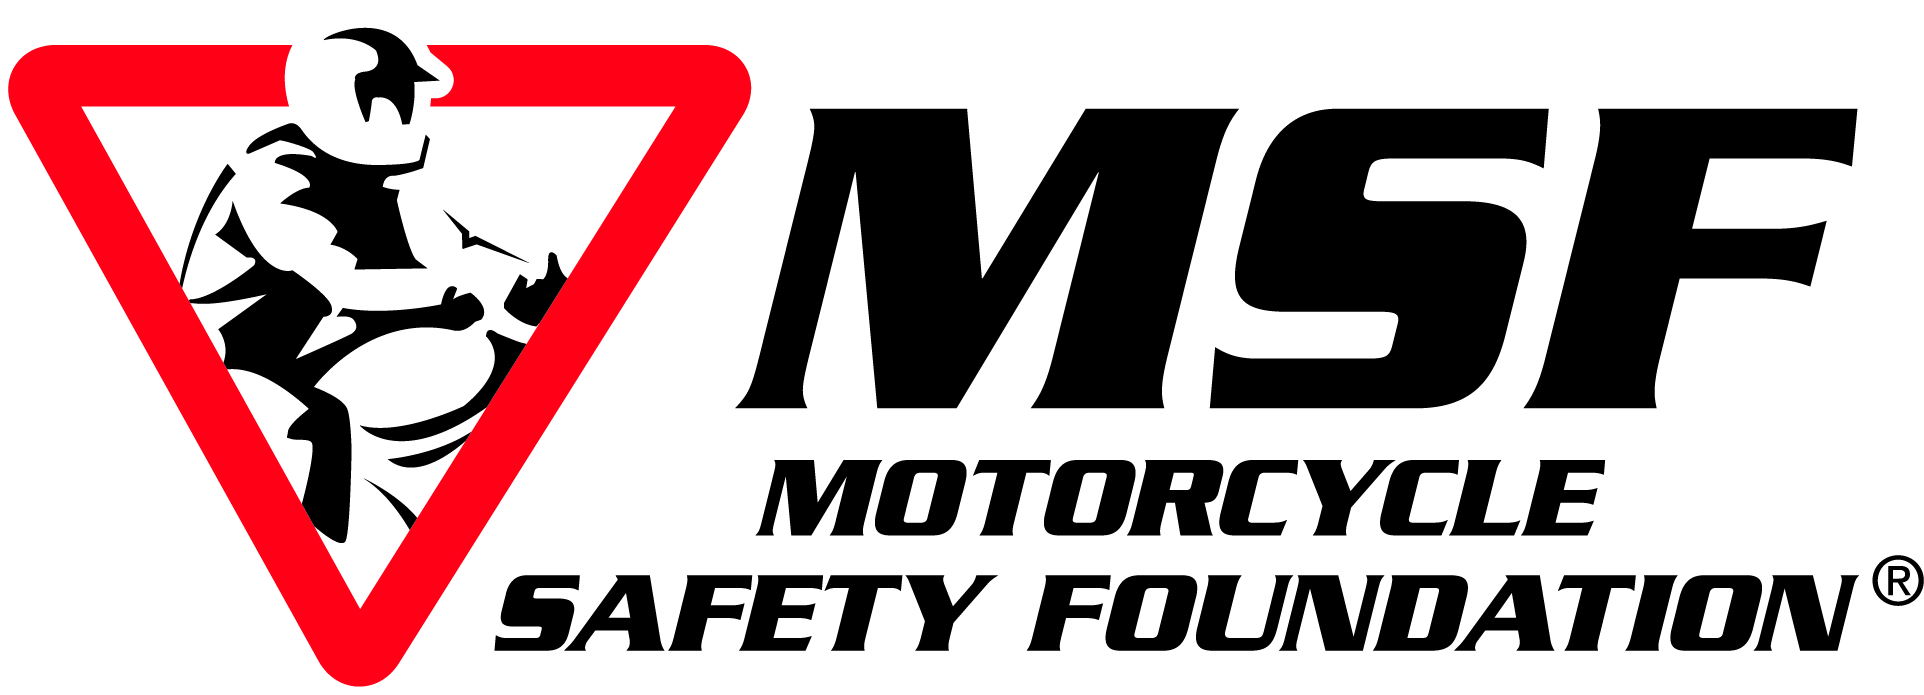 Ga Motorcycle Safety Program